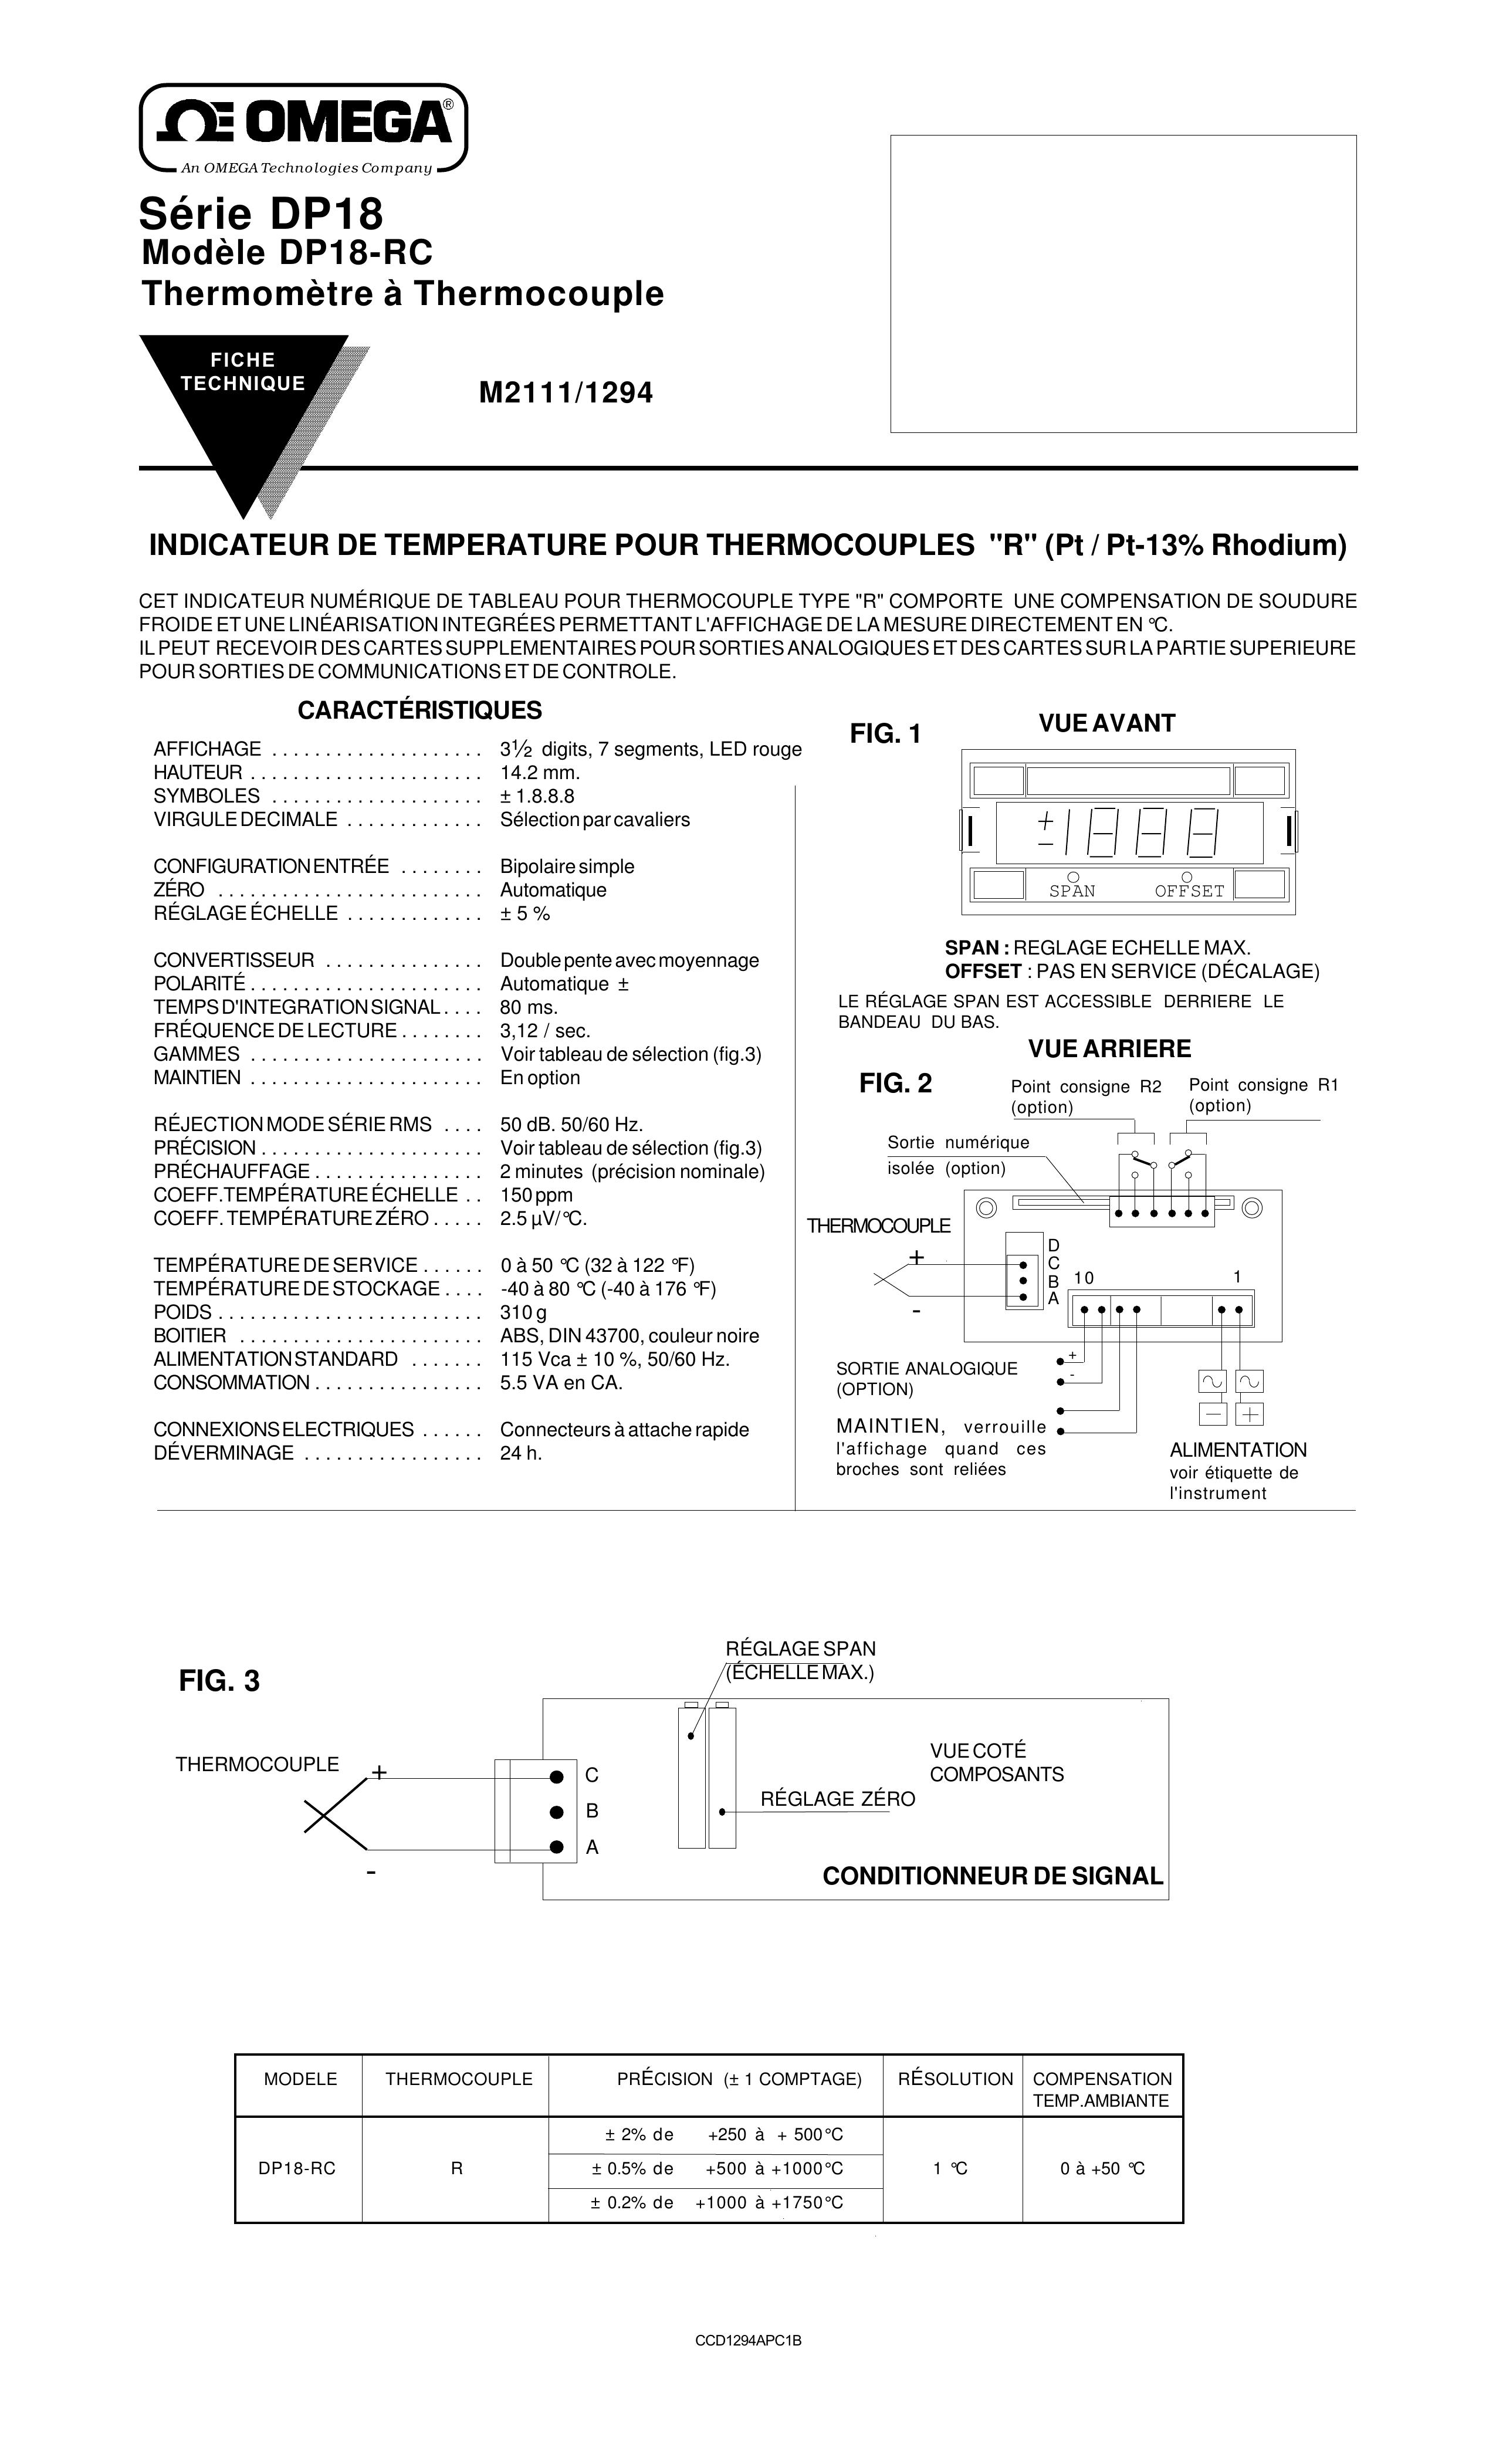 Iomega DP18-RC Thermometer User Manual